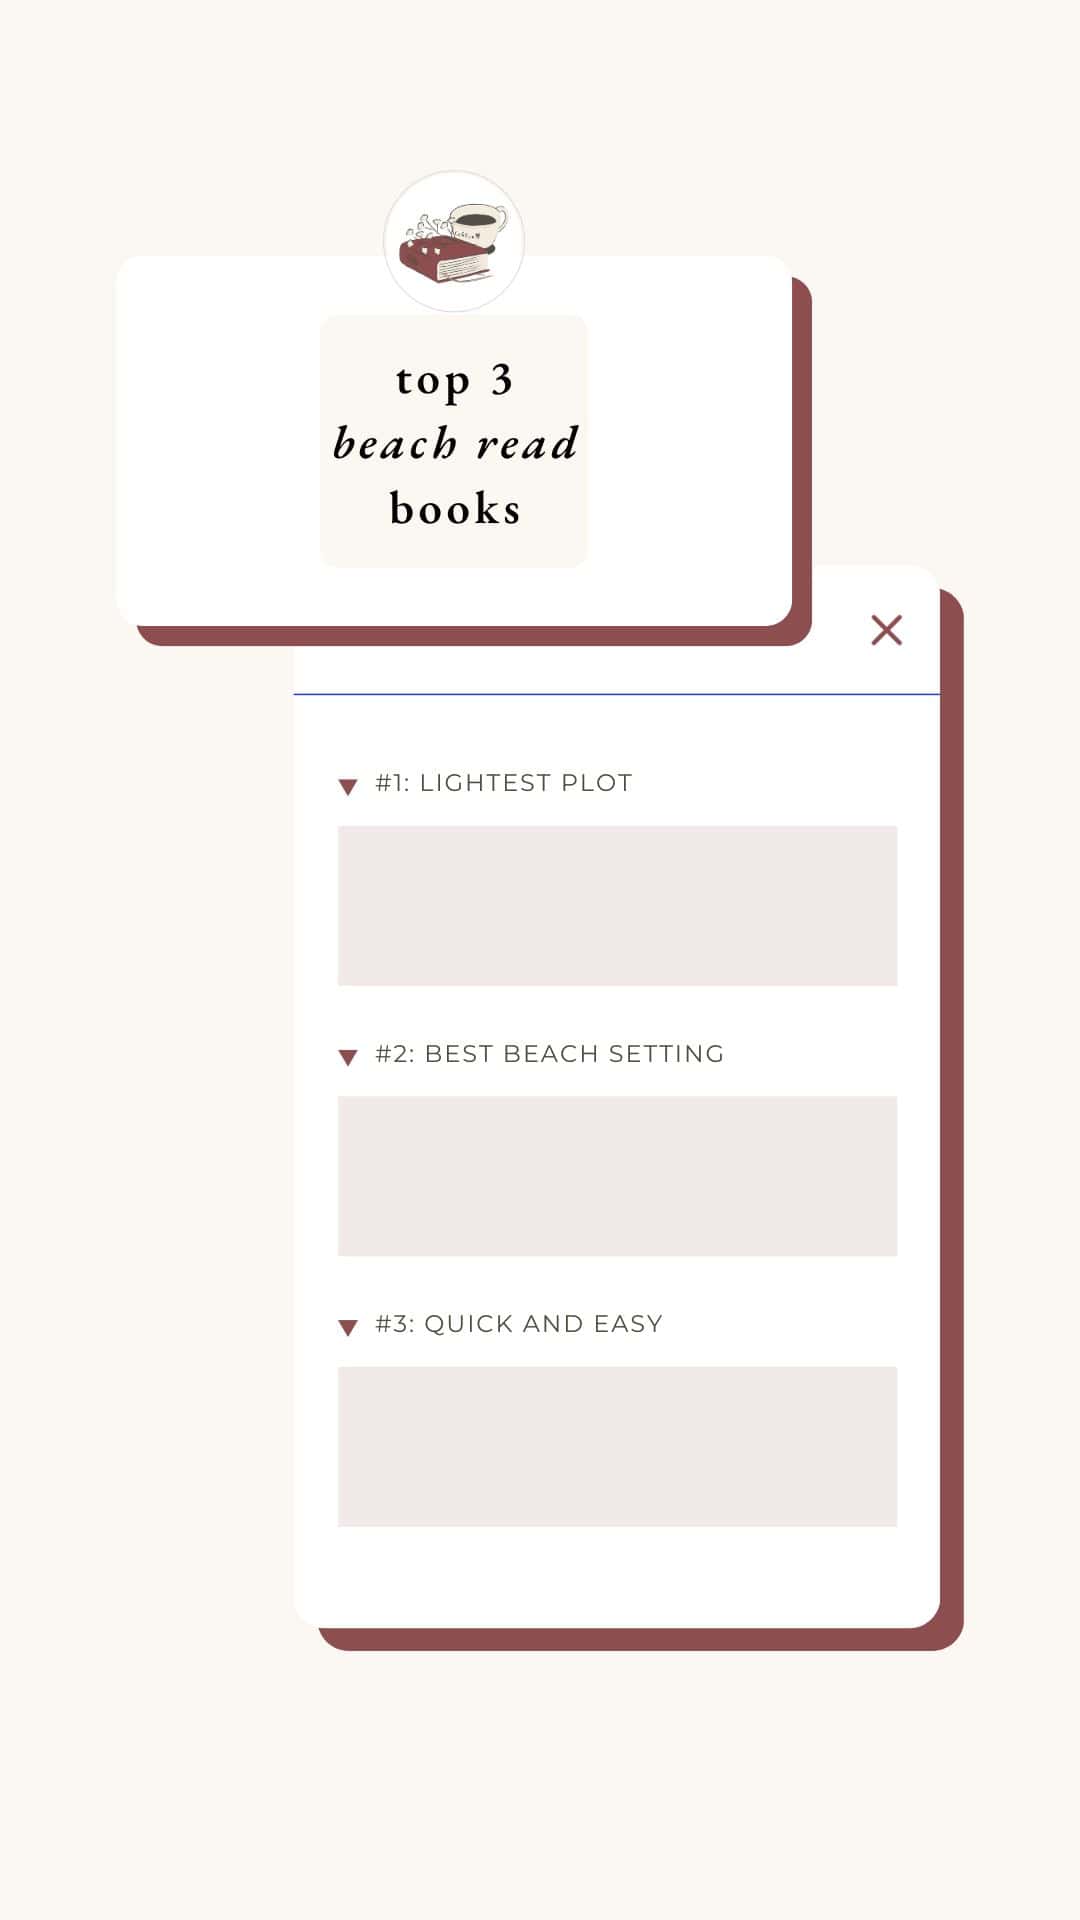 top 3 beach reads bookstagram story template.